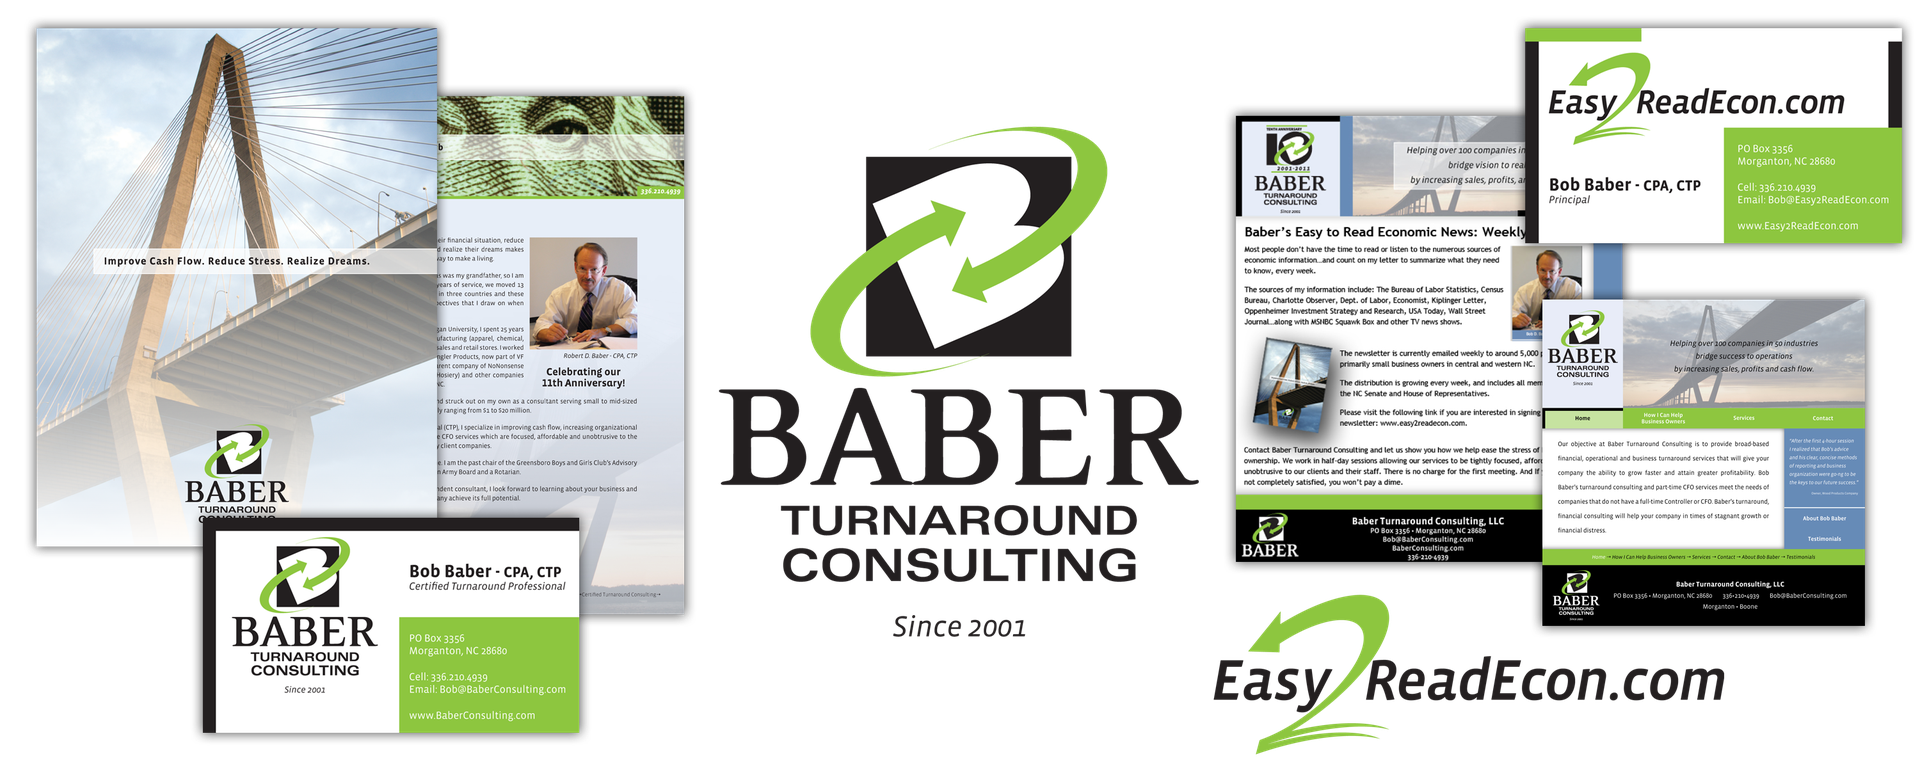 Baber Turnaround Consulting brand